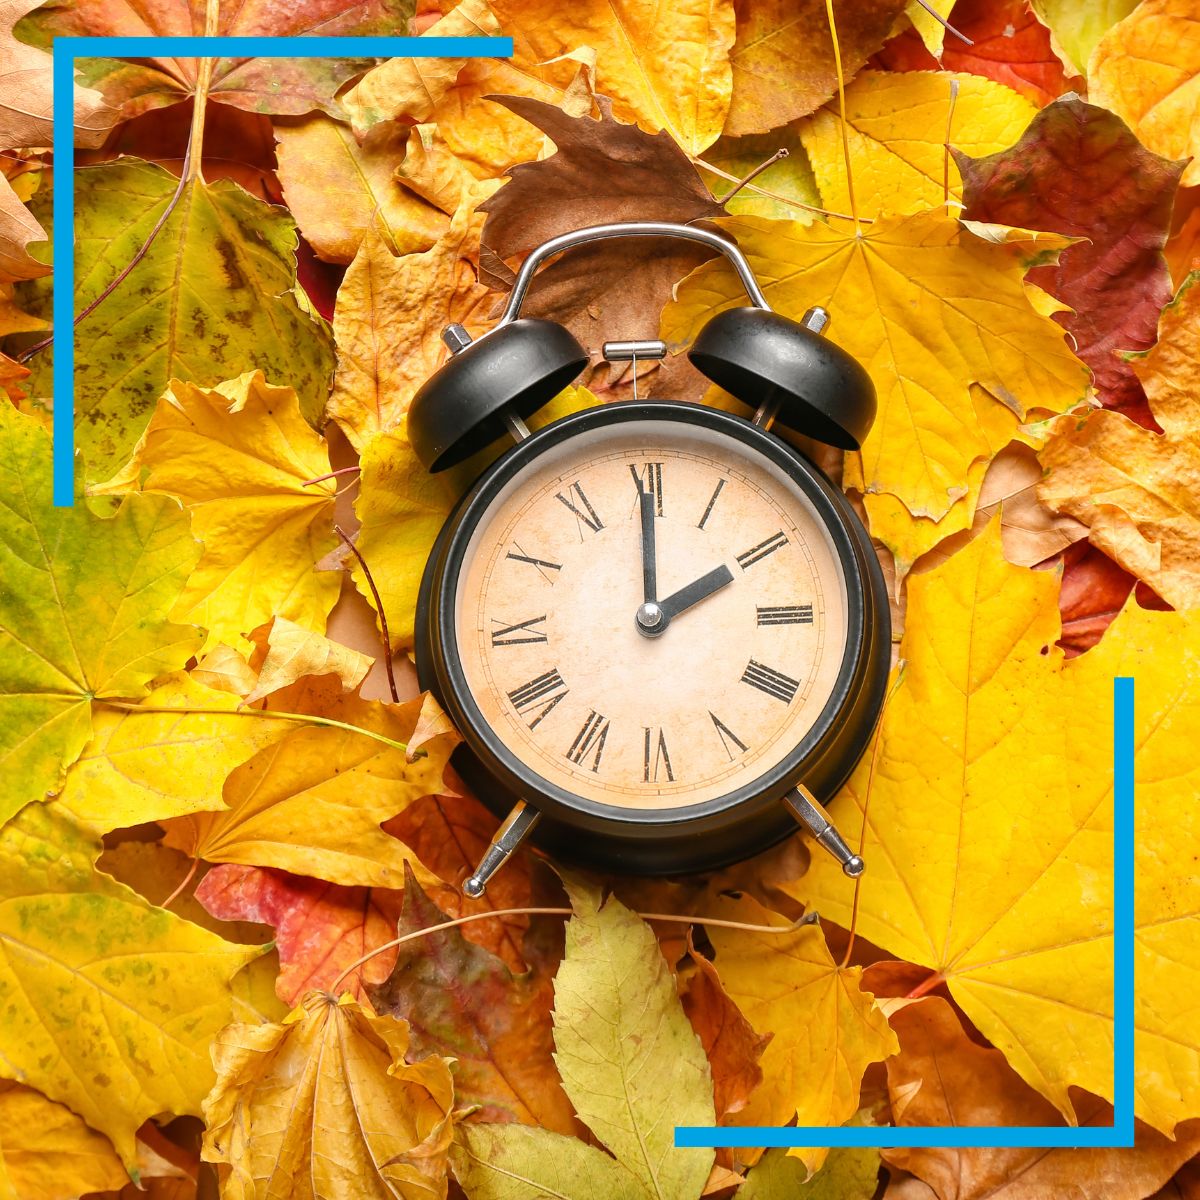 Alarm clock nestled in leaves